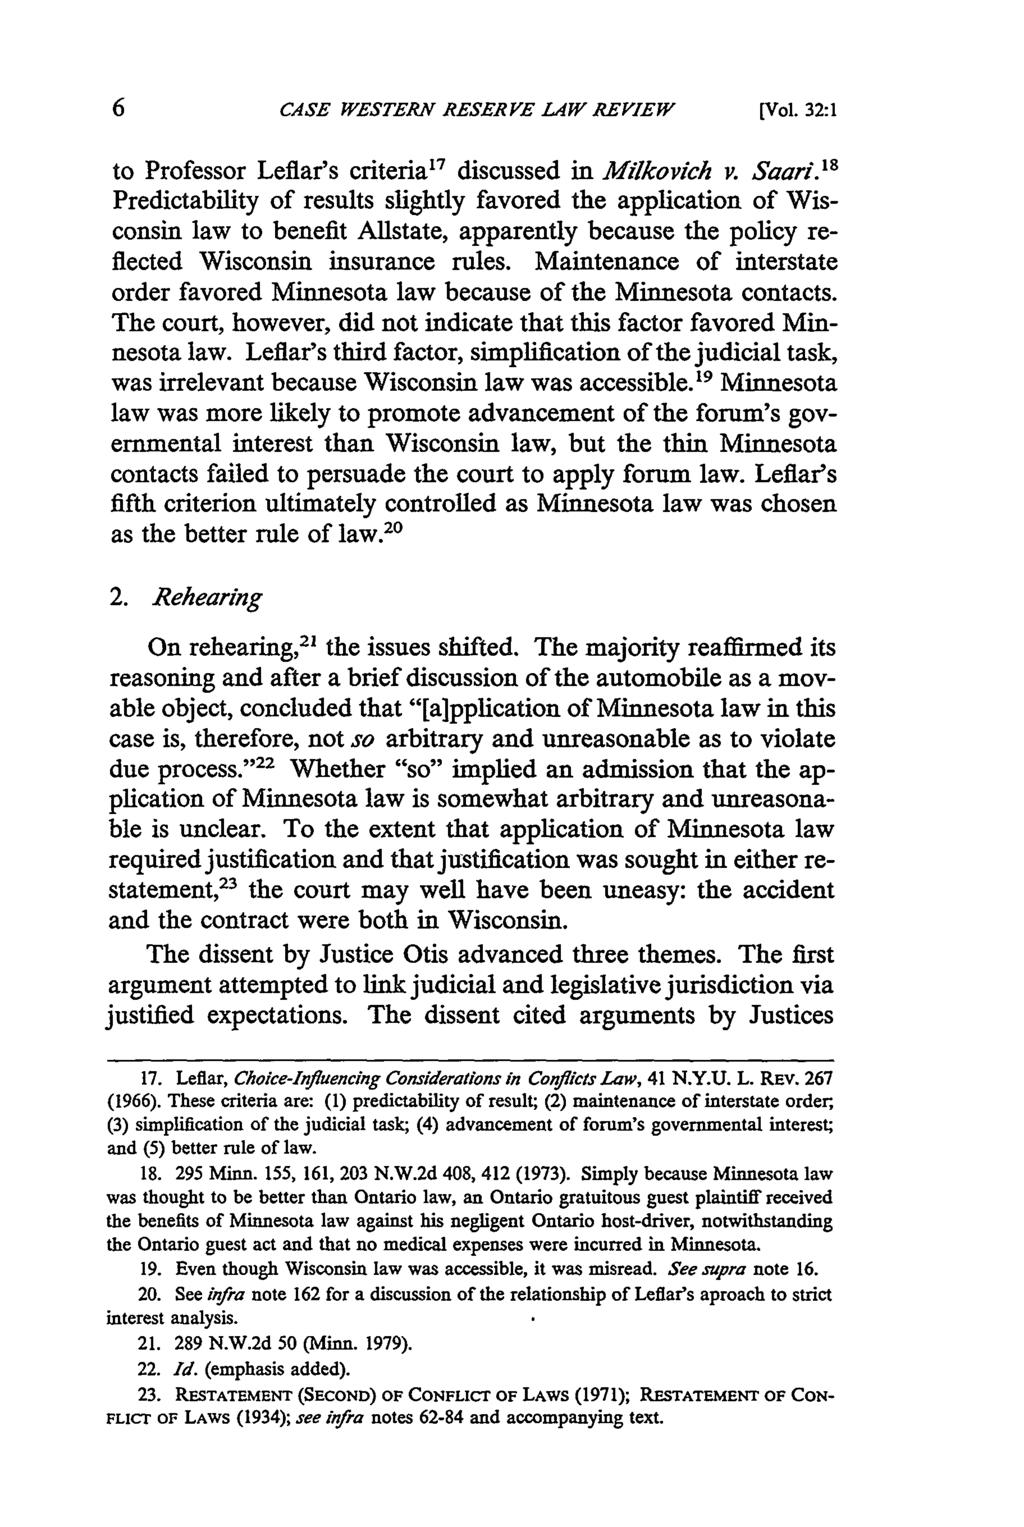 CASE WESTERJ NRESER VE LAW REVIEW [Vol. 32:1 to Professor Leflar's criteria 7 discussed in Milkovich v. Saari.